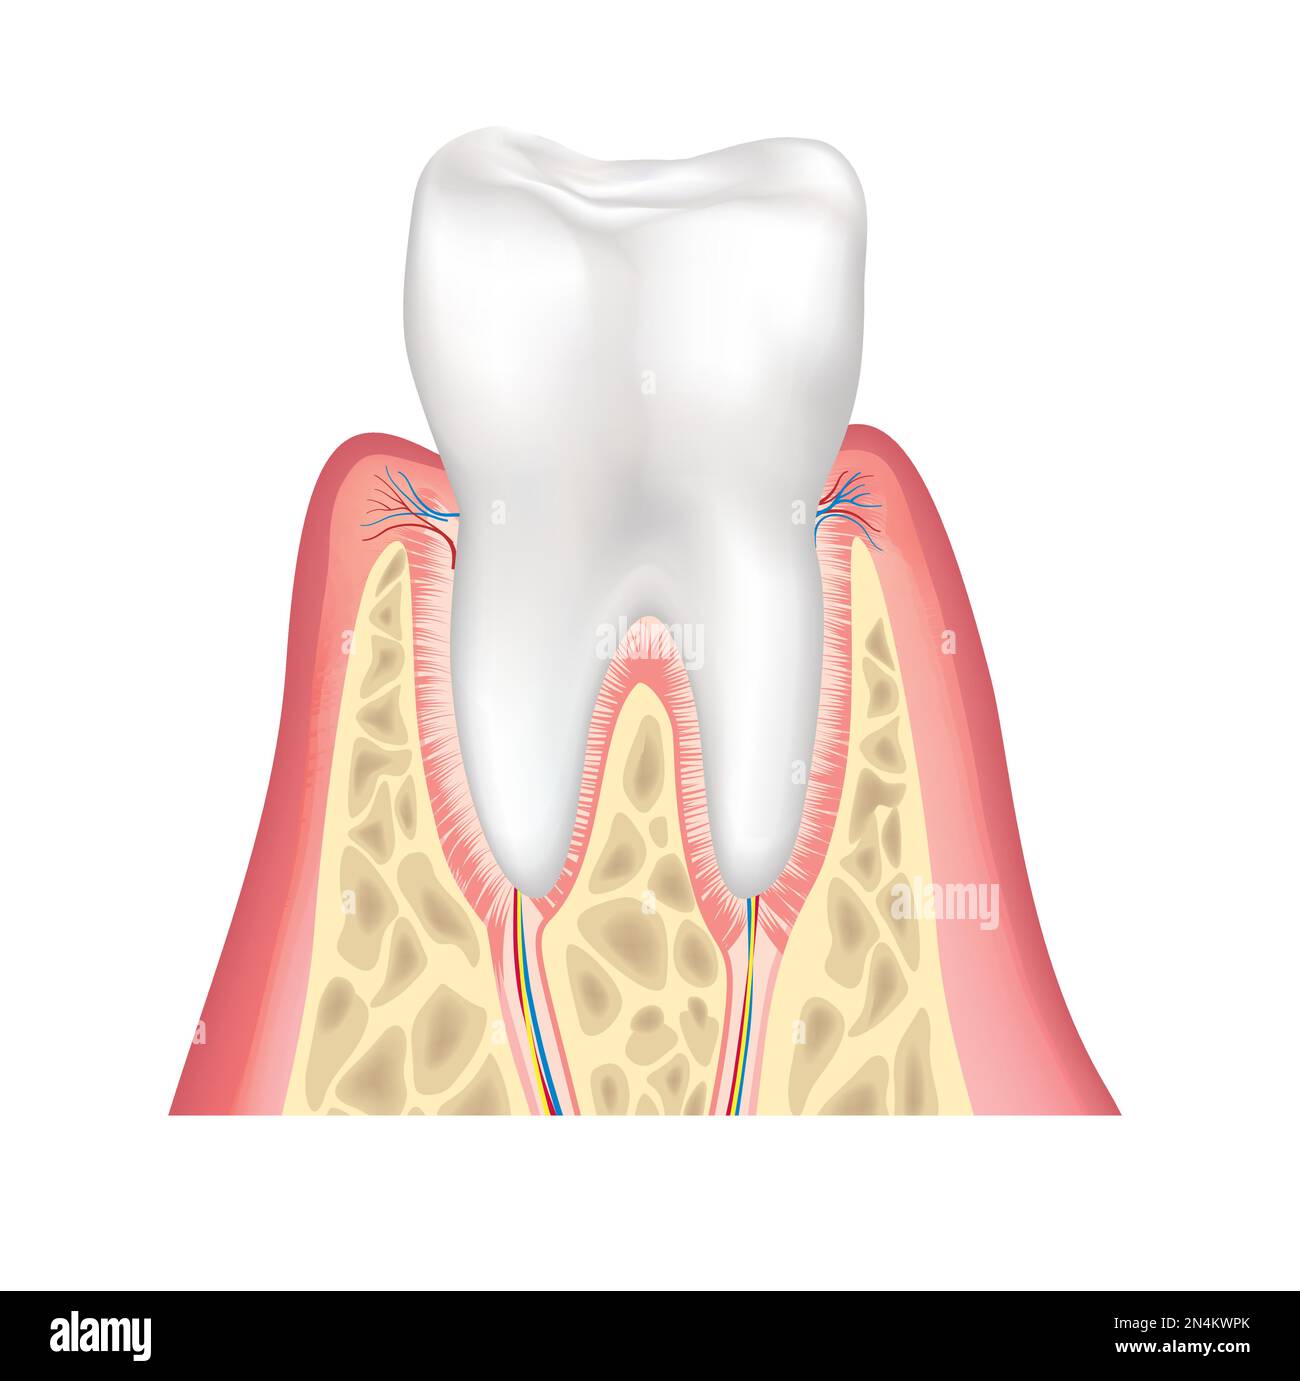 Tooth anatomy. Healthy teeth structure. Dental medical vector illustration. Stock Vector